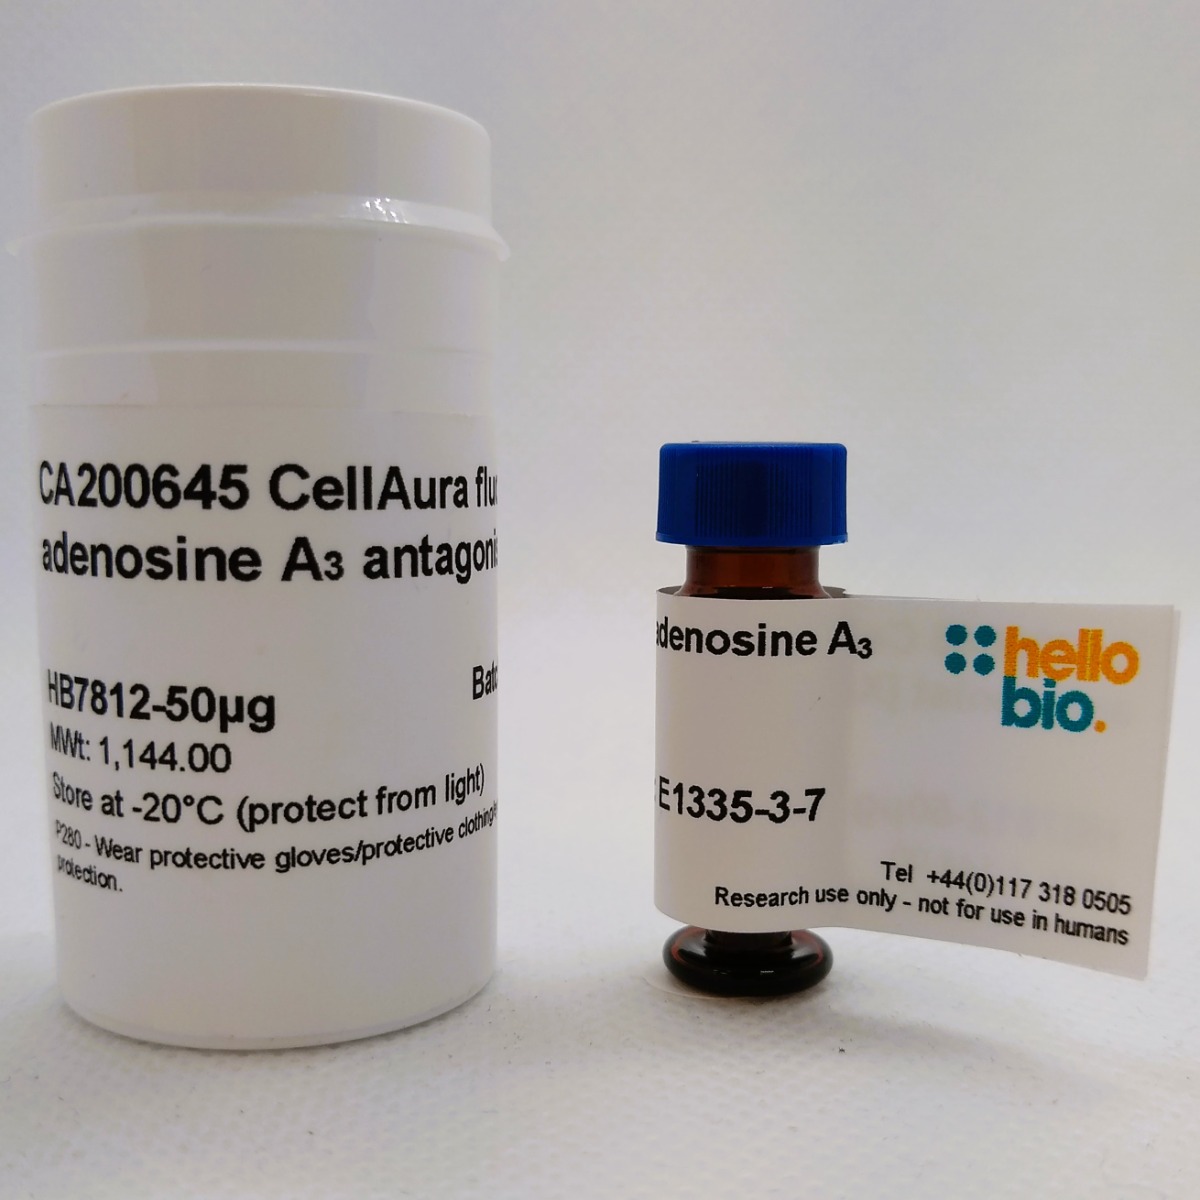 CellAura fluorescent adenosine A3 antagonist [XAC] product vial image | Hello Bio